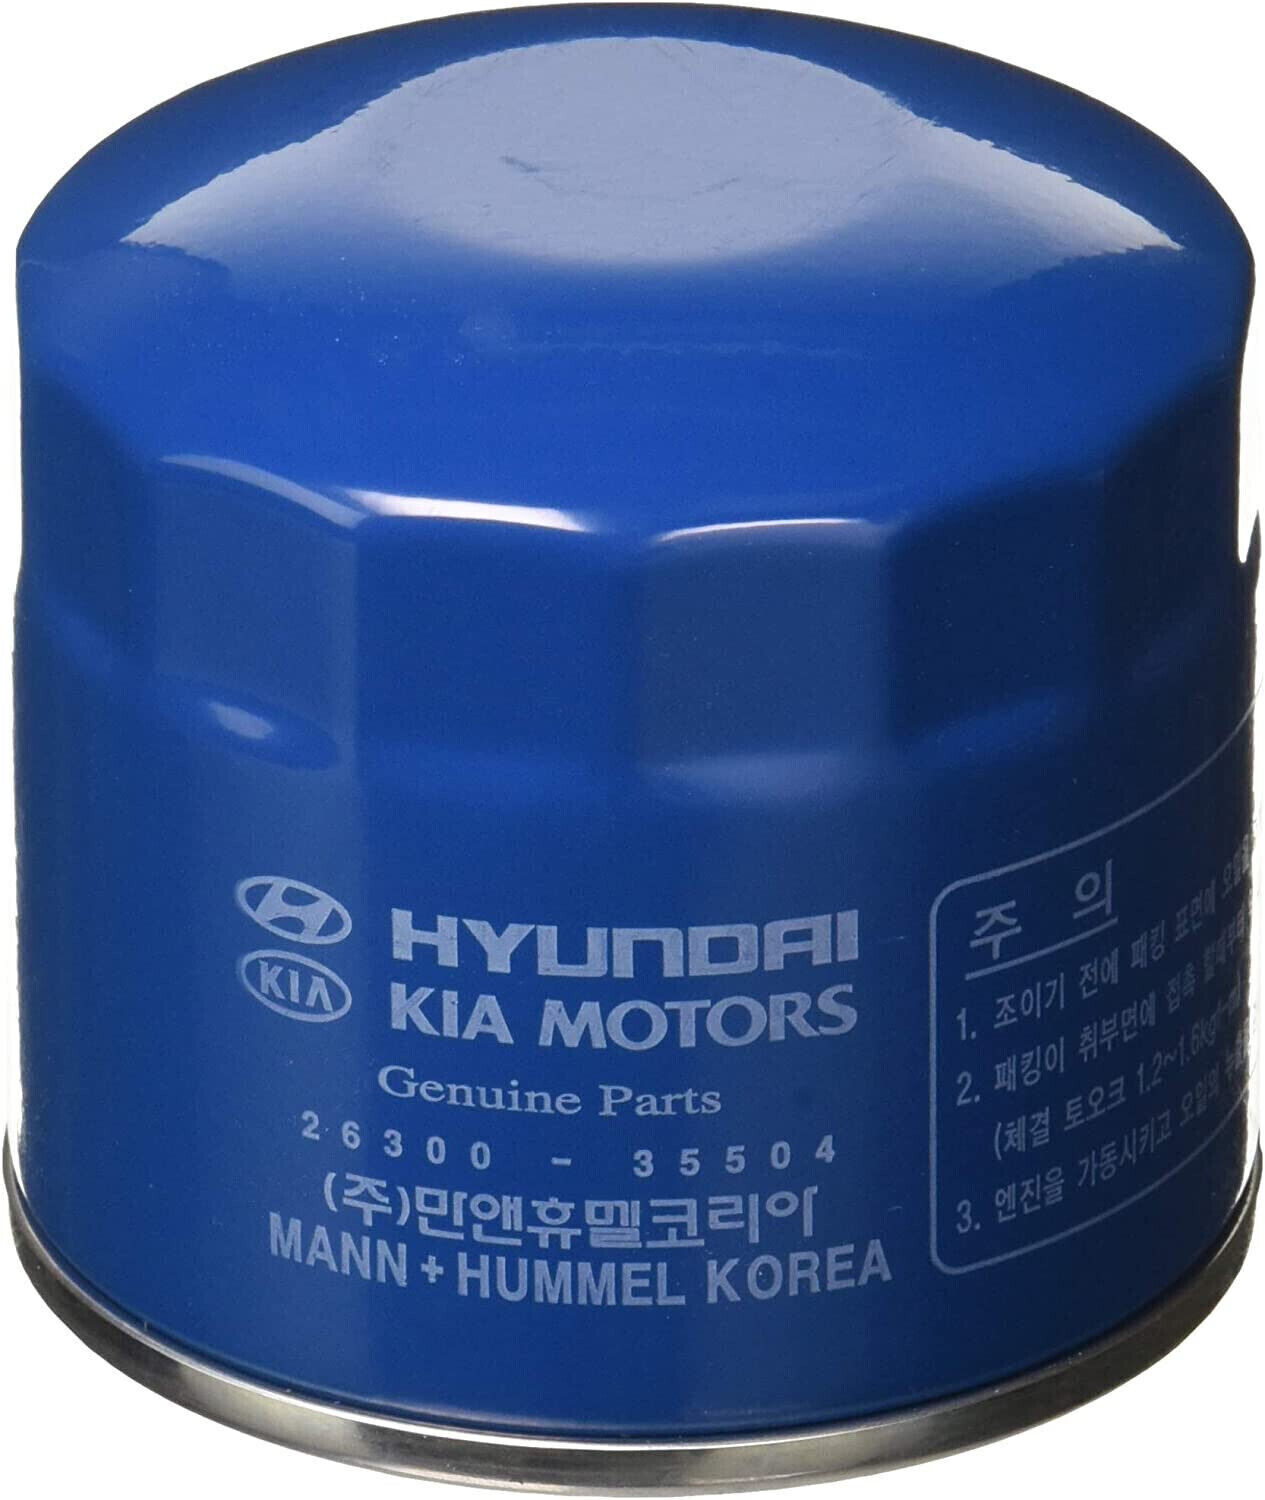 2 Pcs Engine Oil Filter Gasoline for Hyundai Genesis 2010-2014 Genuine